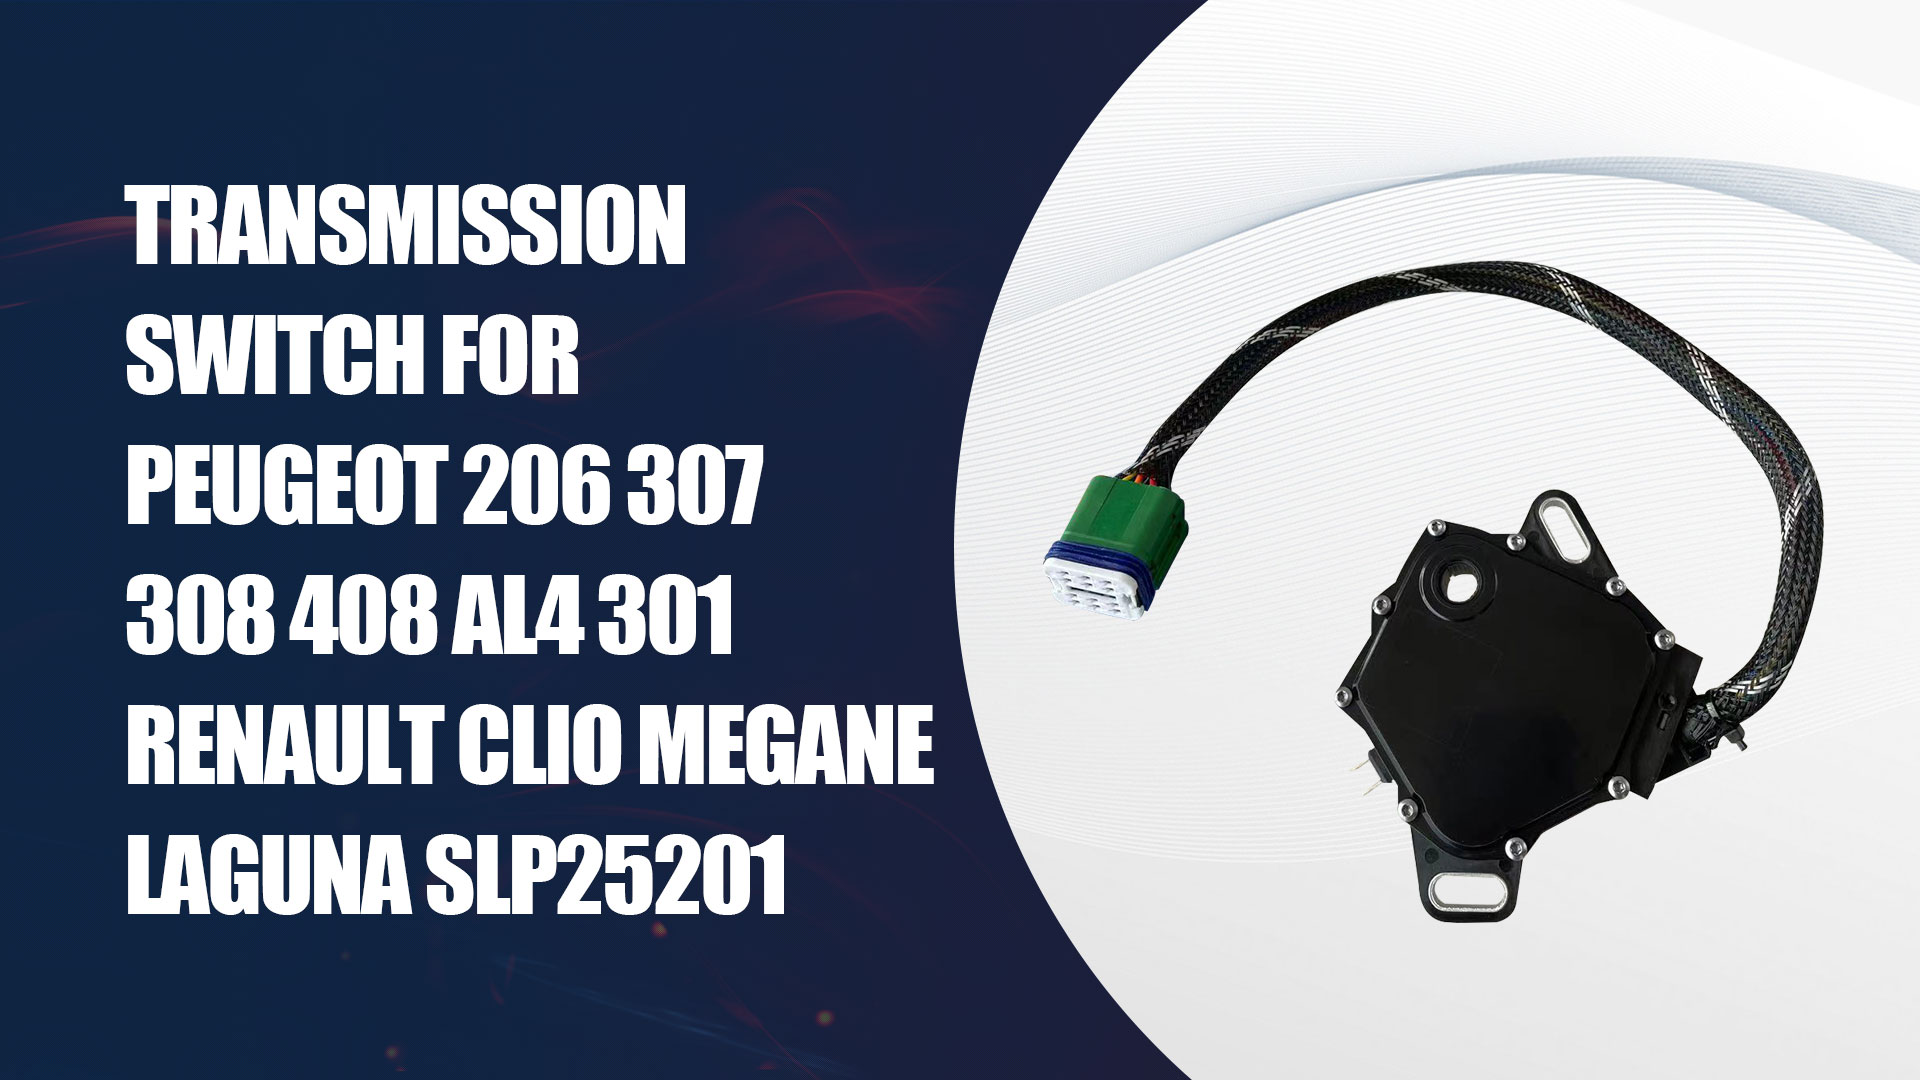 Transmission Switch For Peugeot 206 307 308 408 Al4 301 Renault Clio Megane Laguna Slp25201